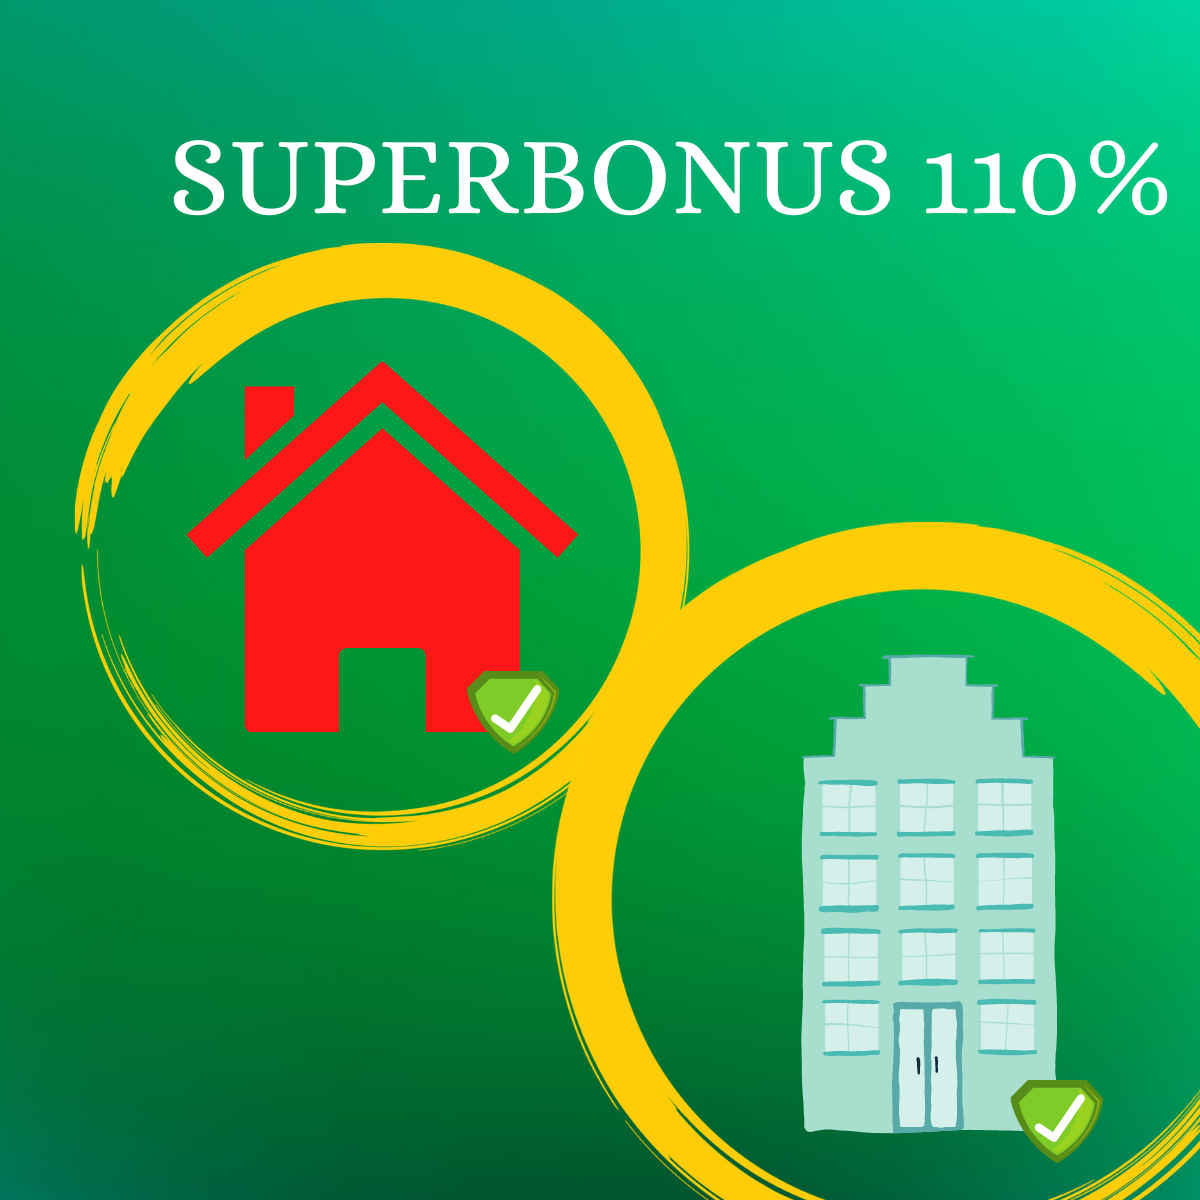 SUPERBONUS 110%: Lo sconto in Fattura